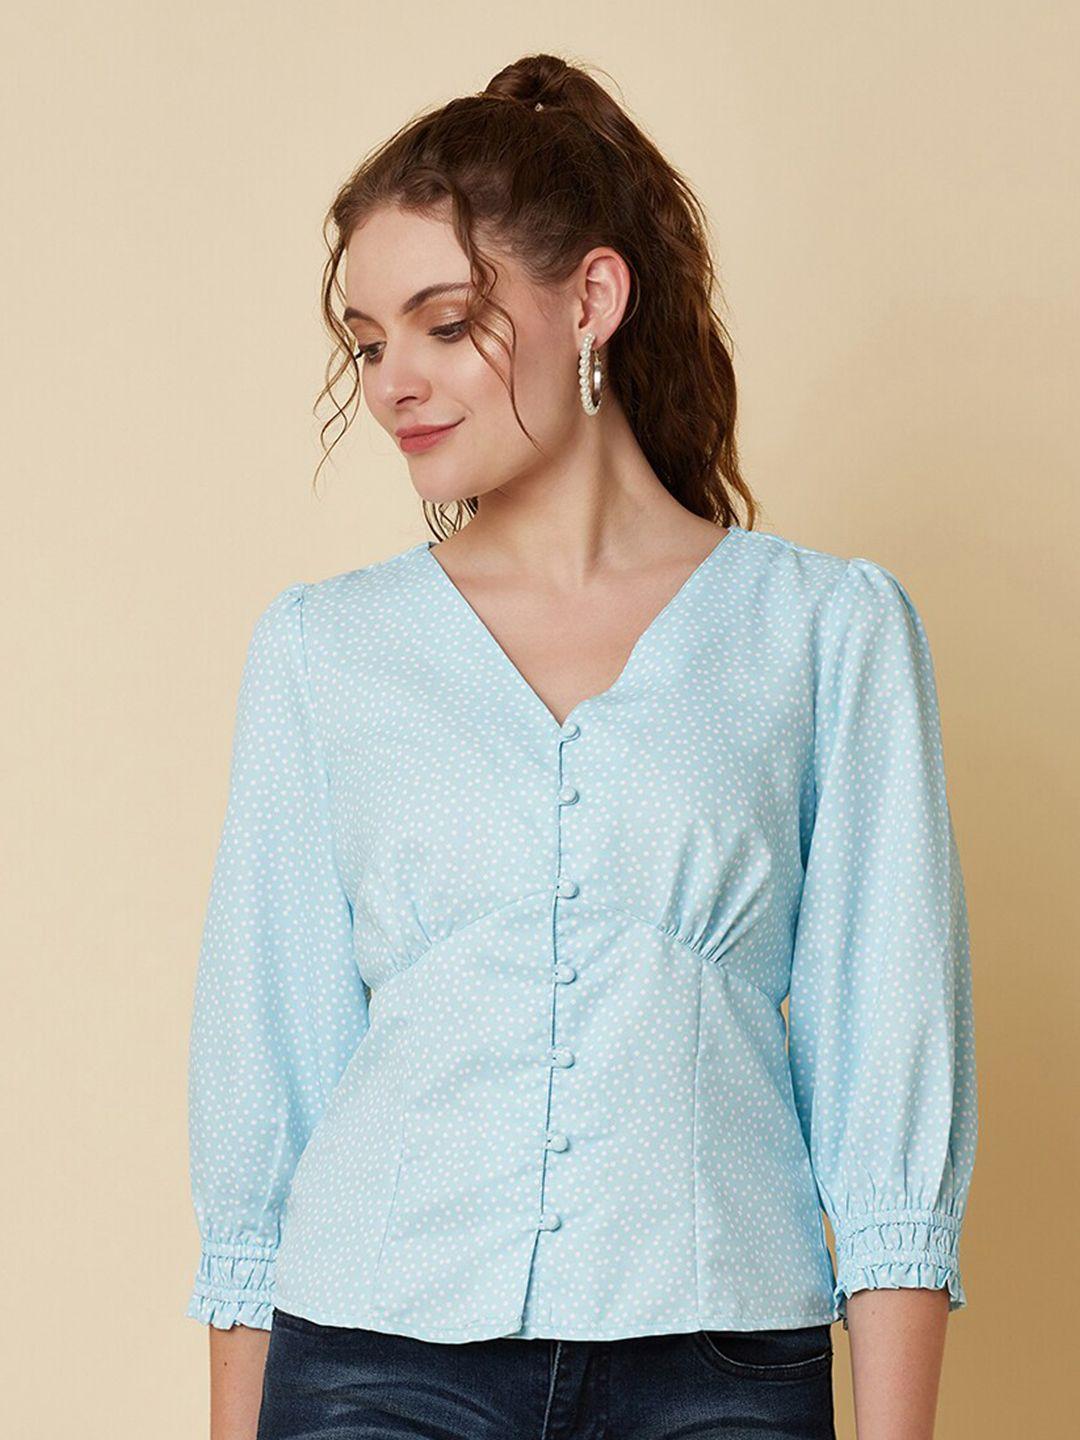 raassio women blue & white print shirt style top